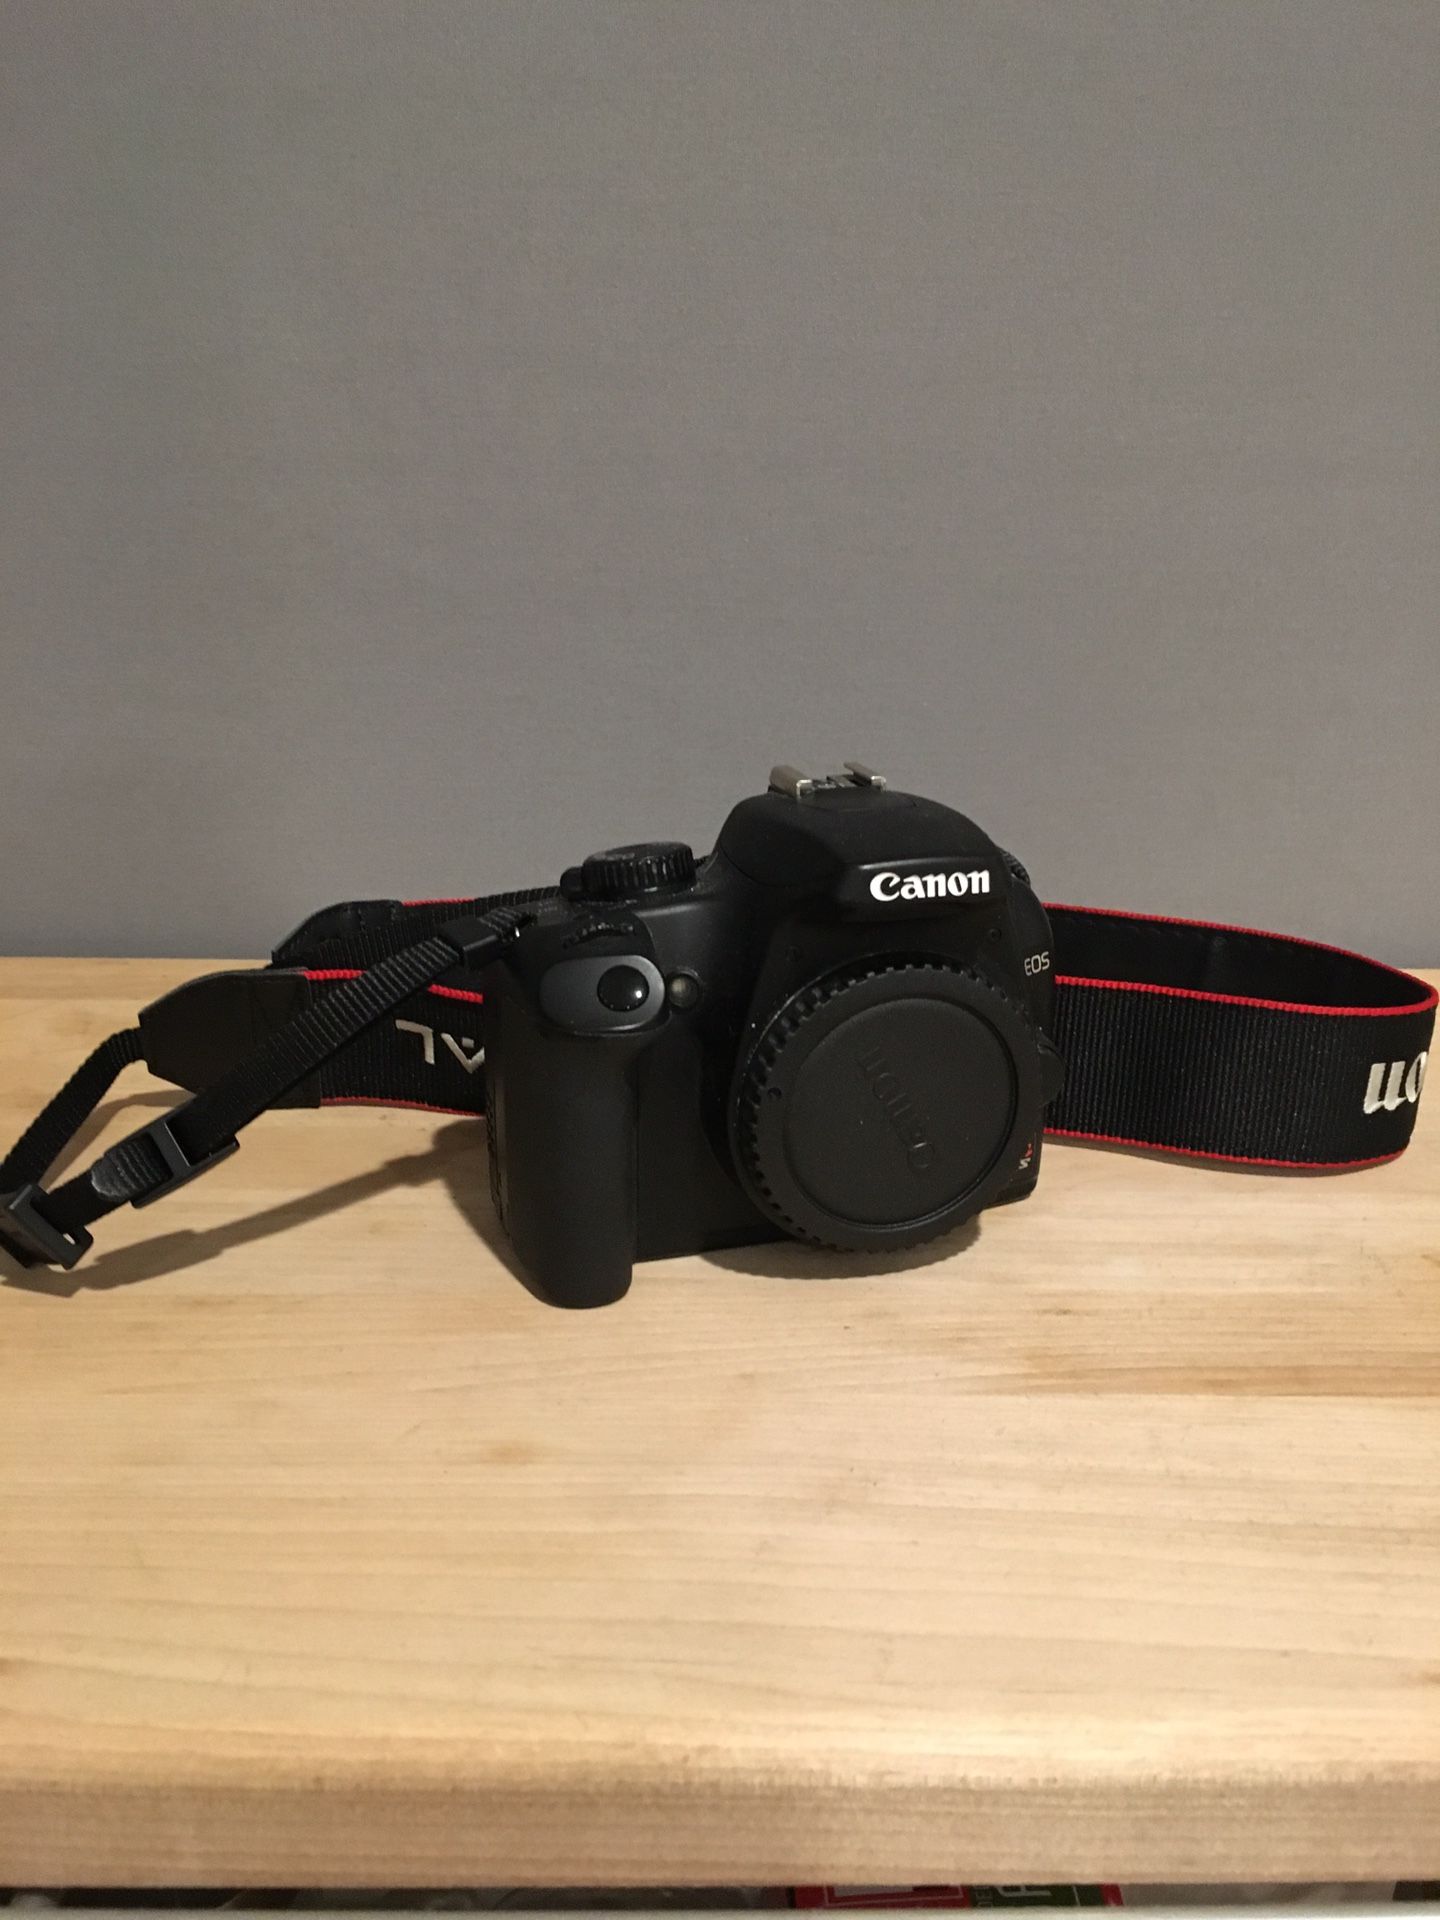 Canon EOS Rebel XS Digital SLR Camera - Black (Body Only)